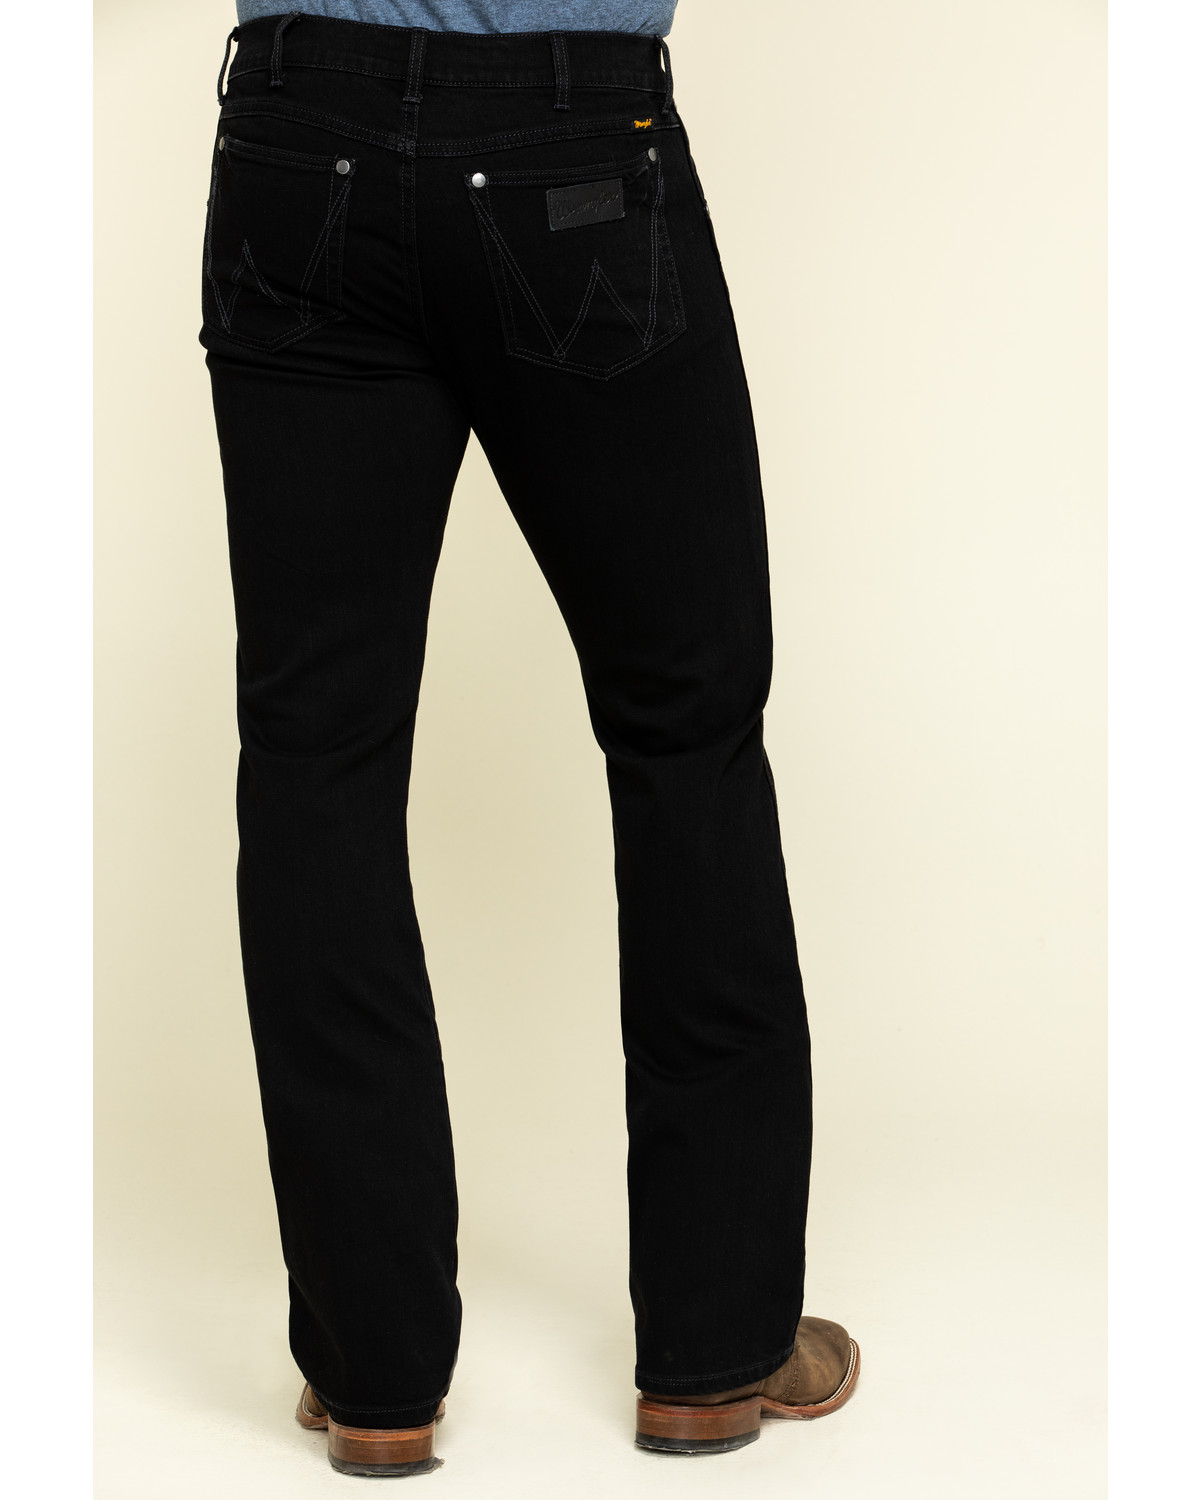 mens black stretch bootcut jeans